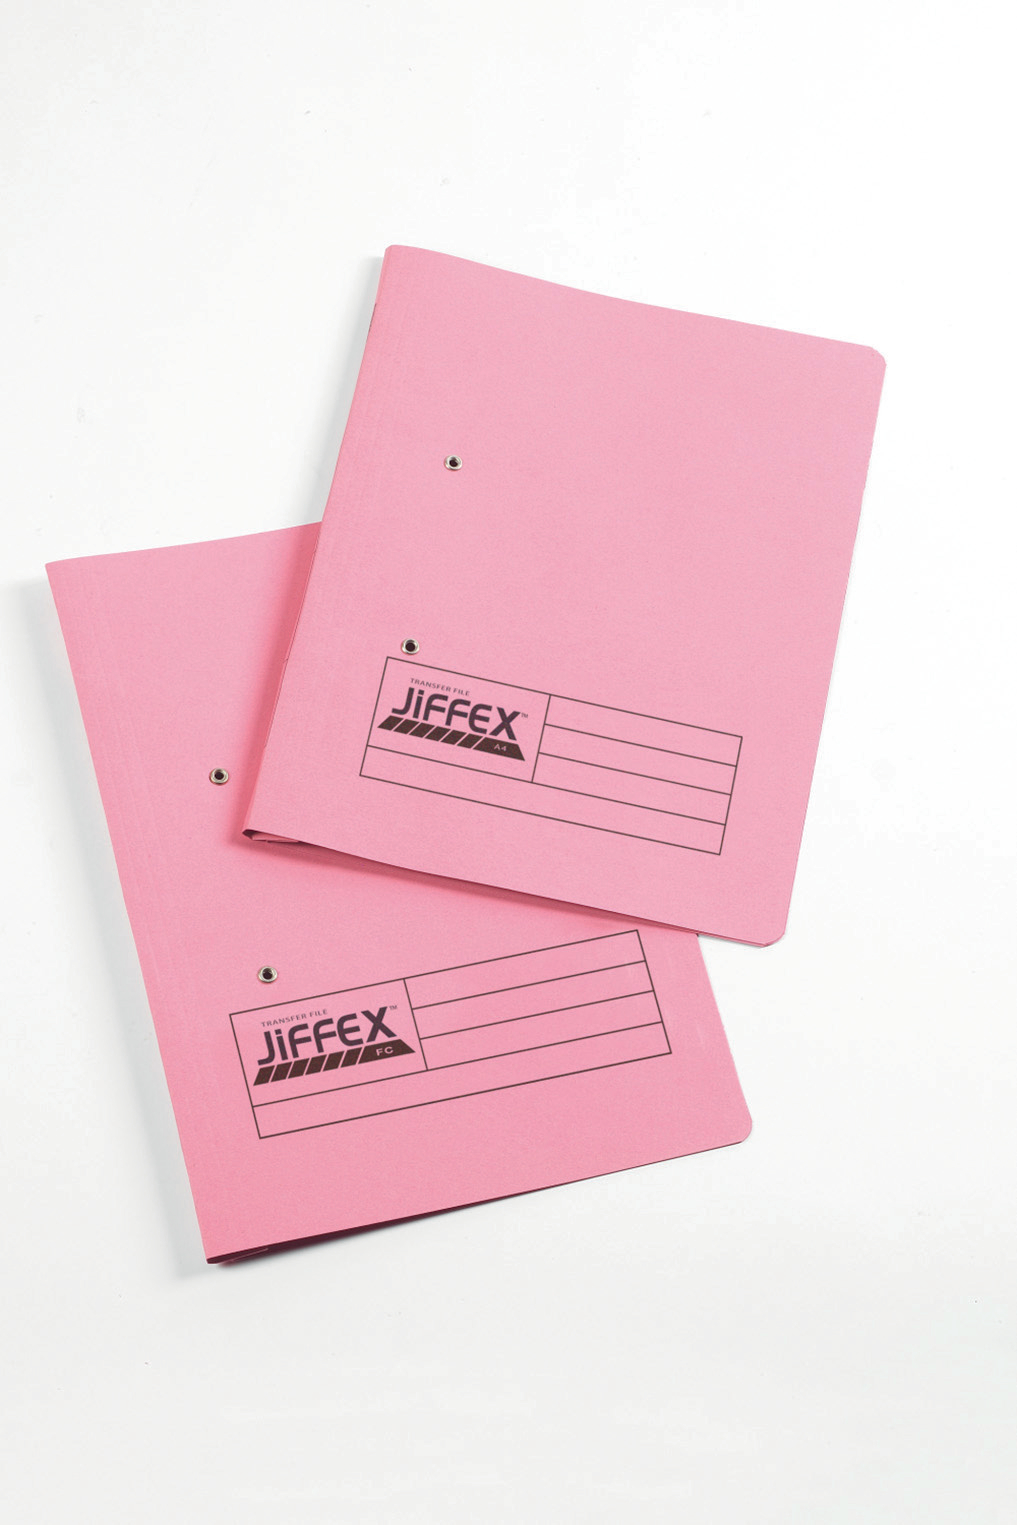 Rexel Jiffex Transfer File Manilla A4 315gsm Pink (Pack 50)